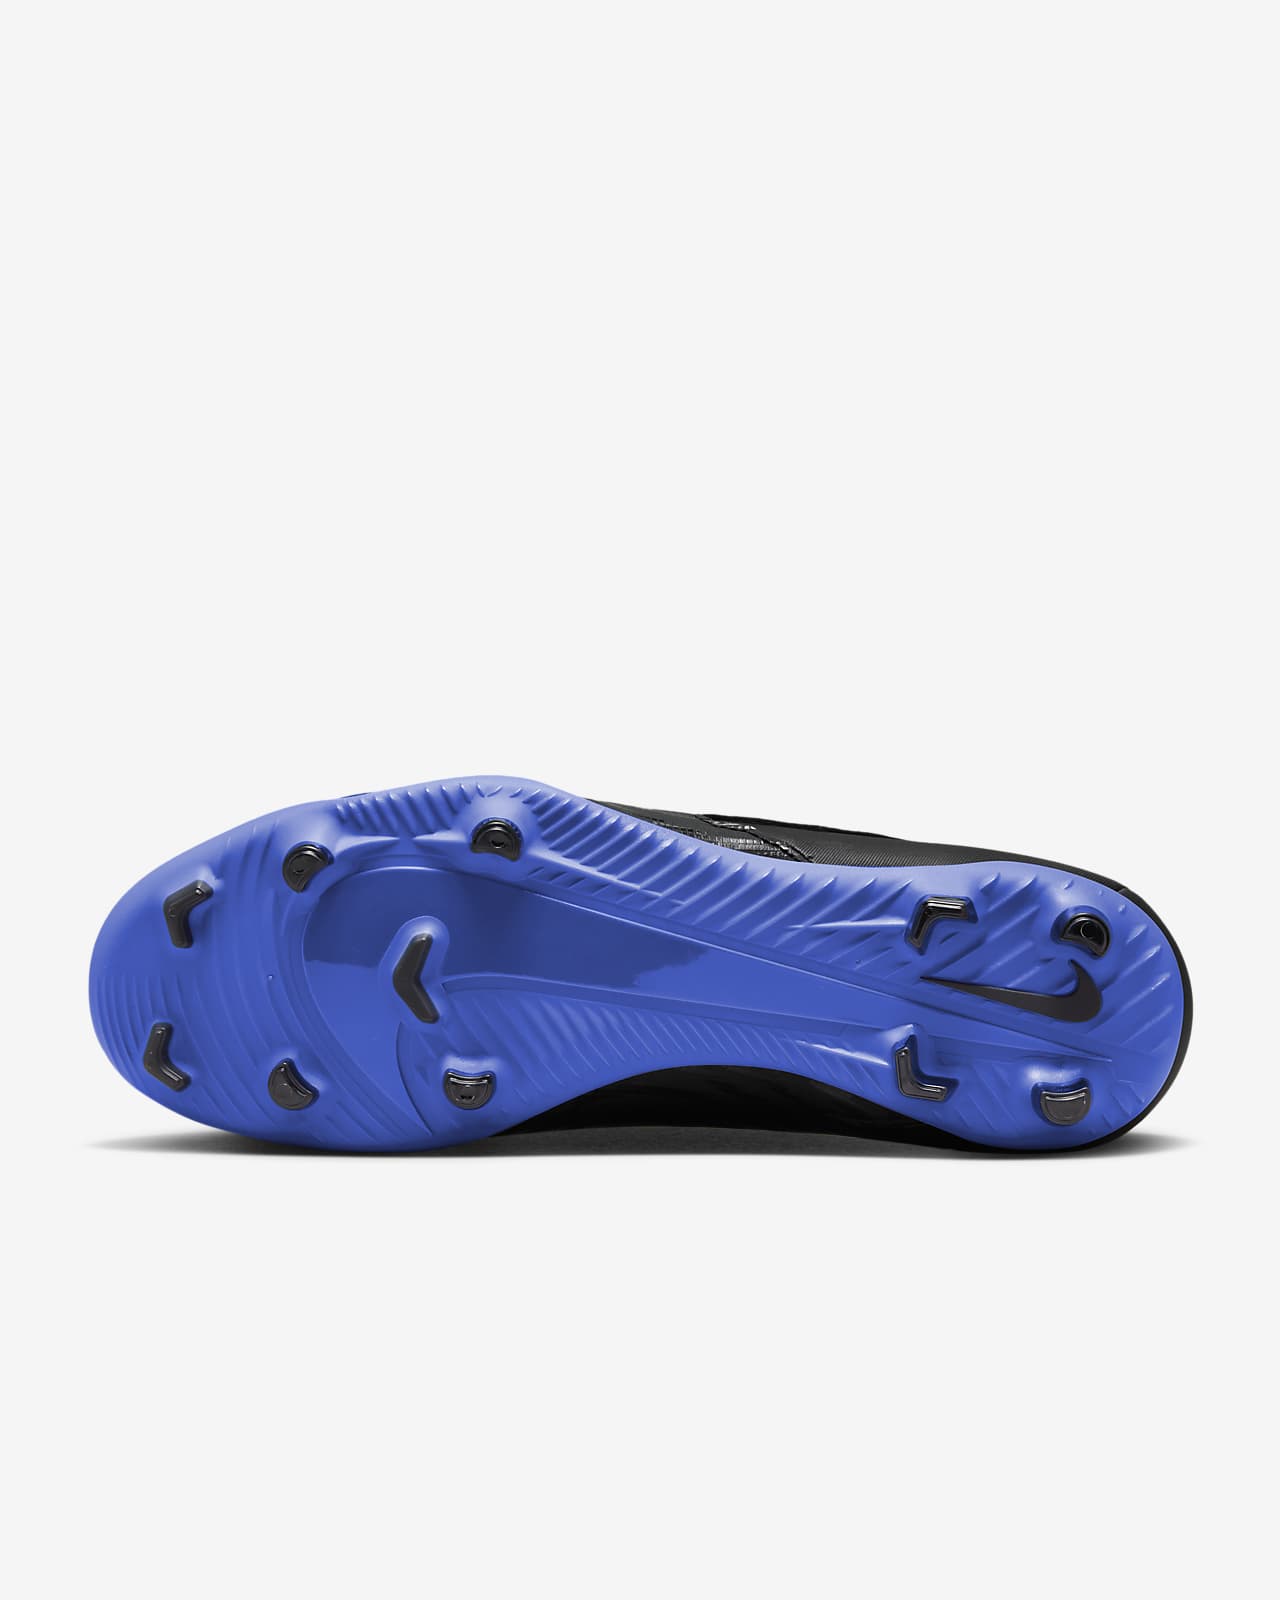 Top Nike Df Swsh Cb Futura Gx Preto - Compre Agora